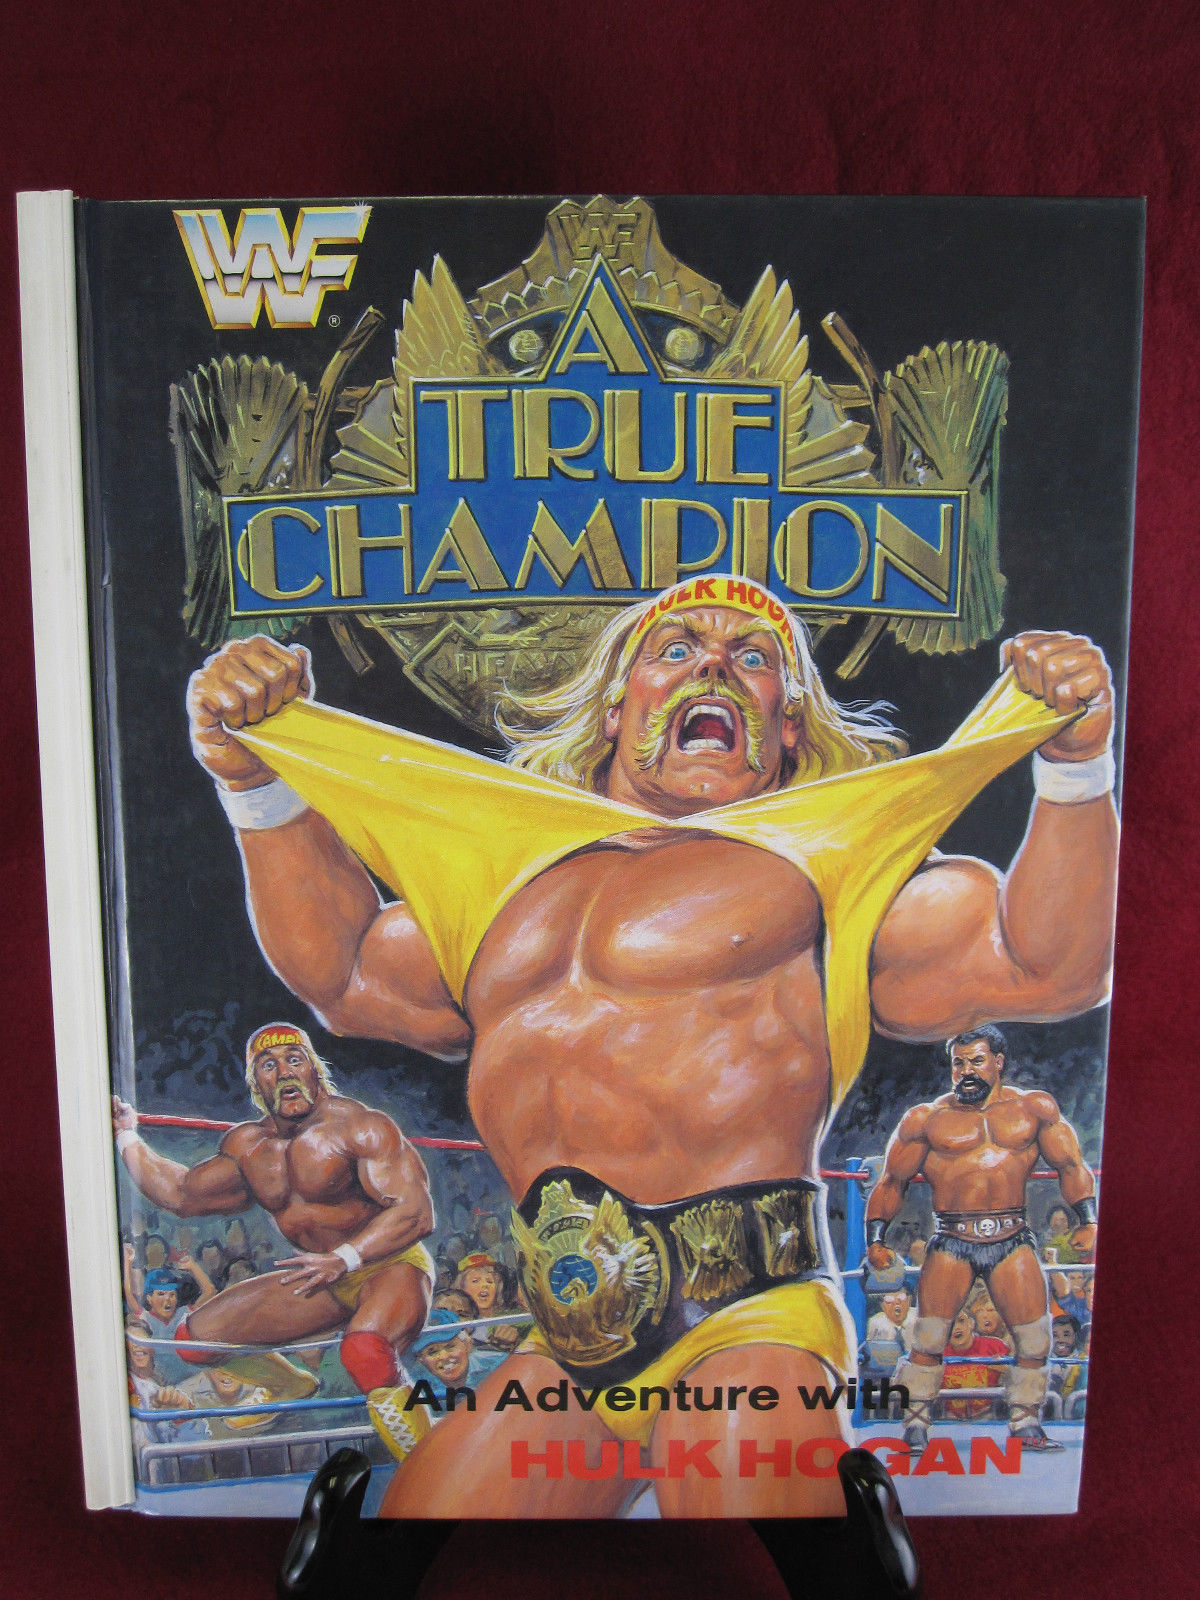 Hulk Hogan A True Champion book front